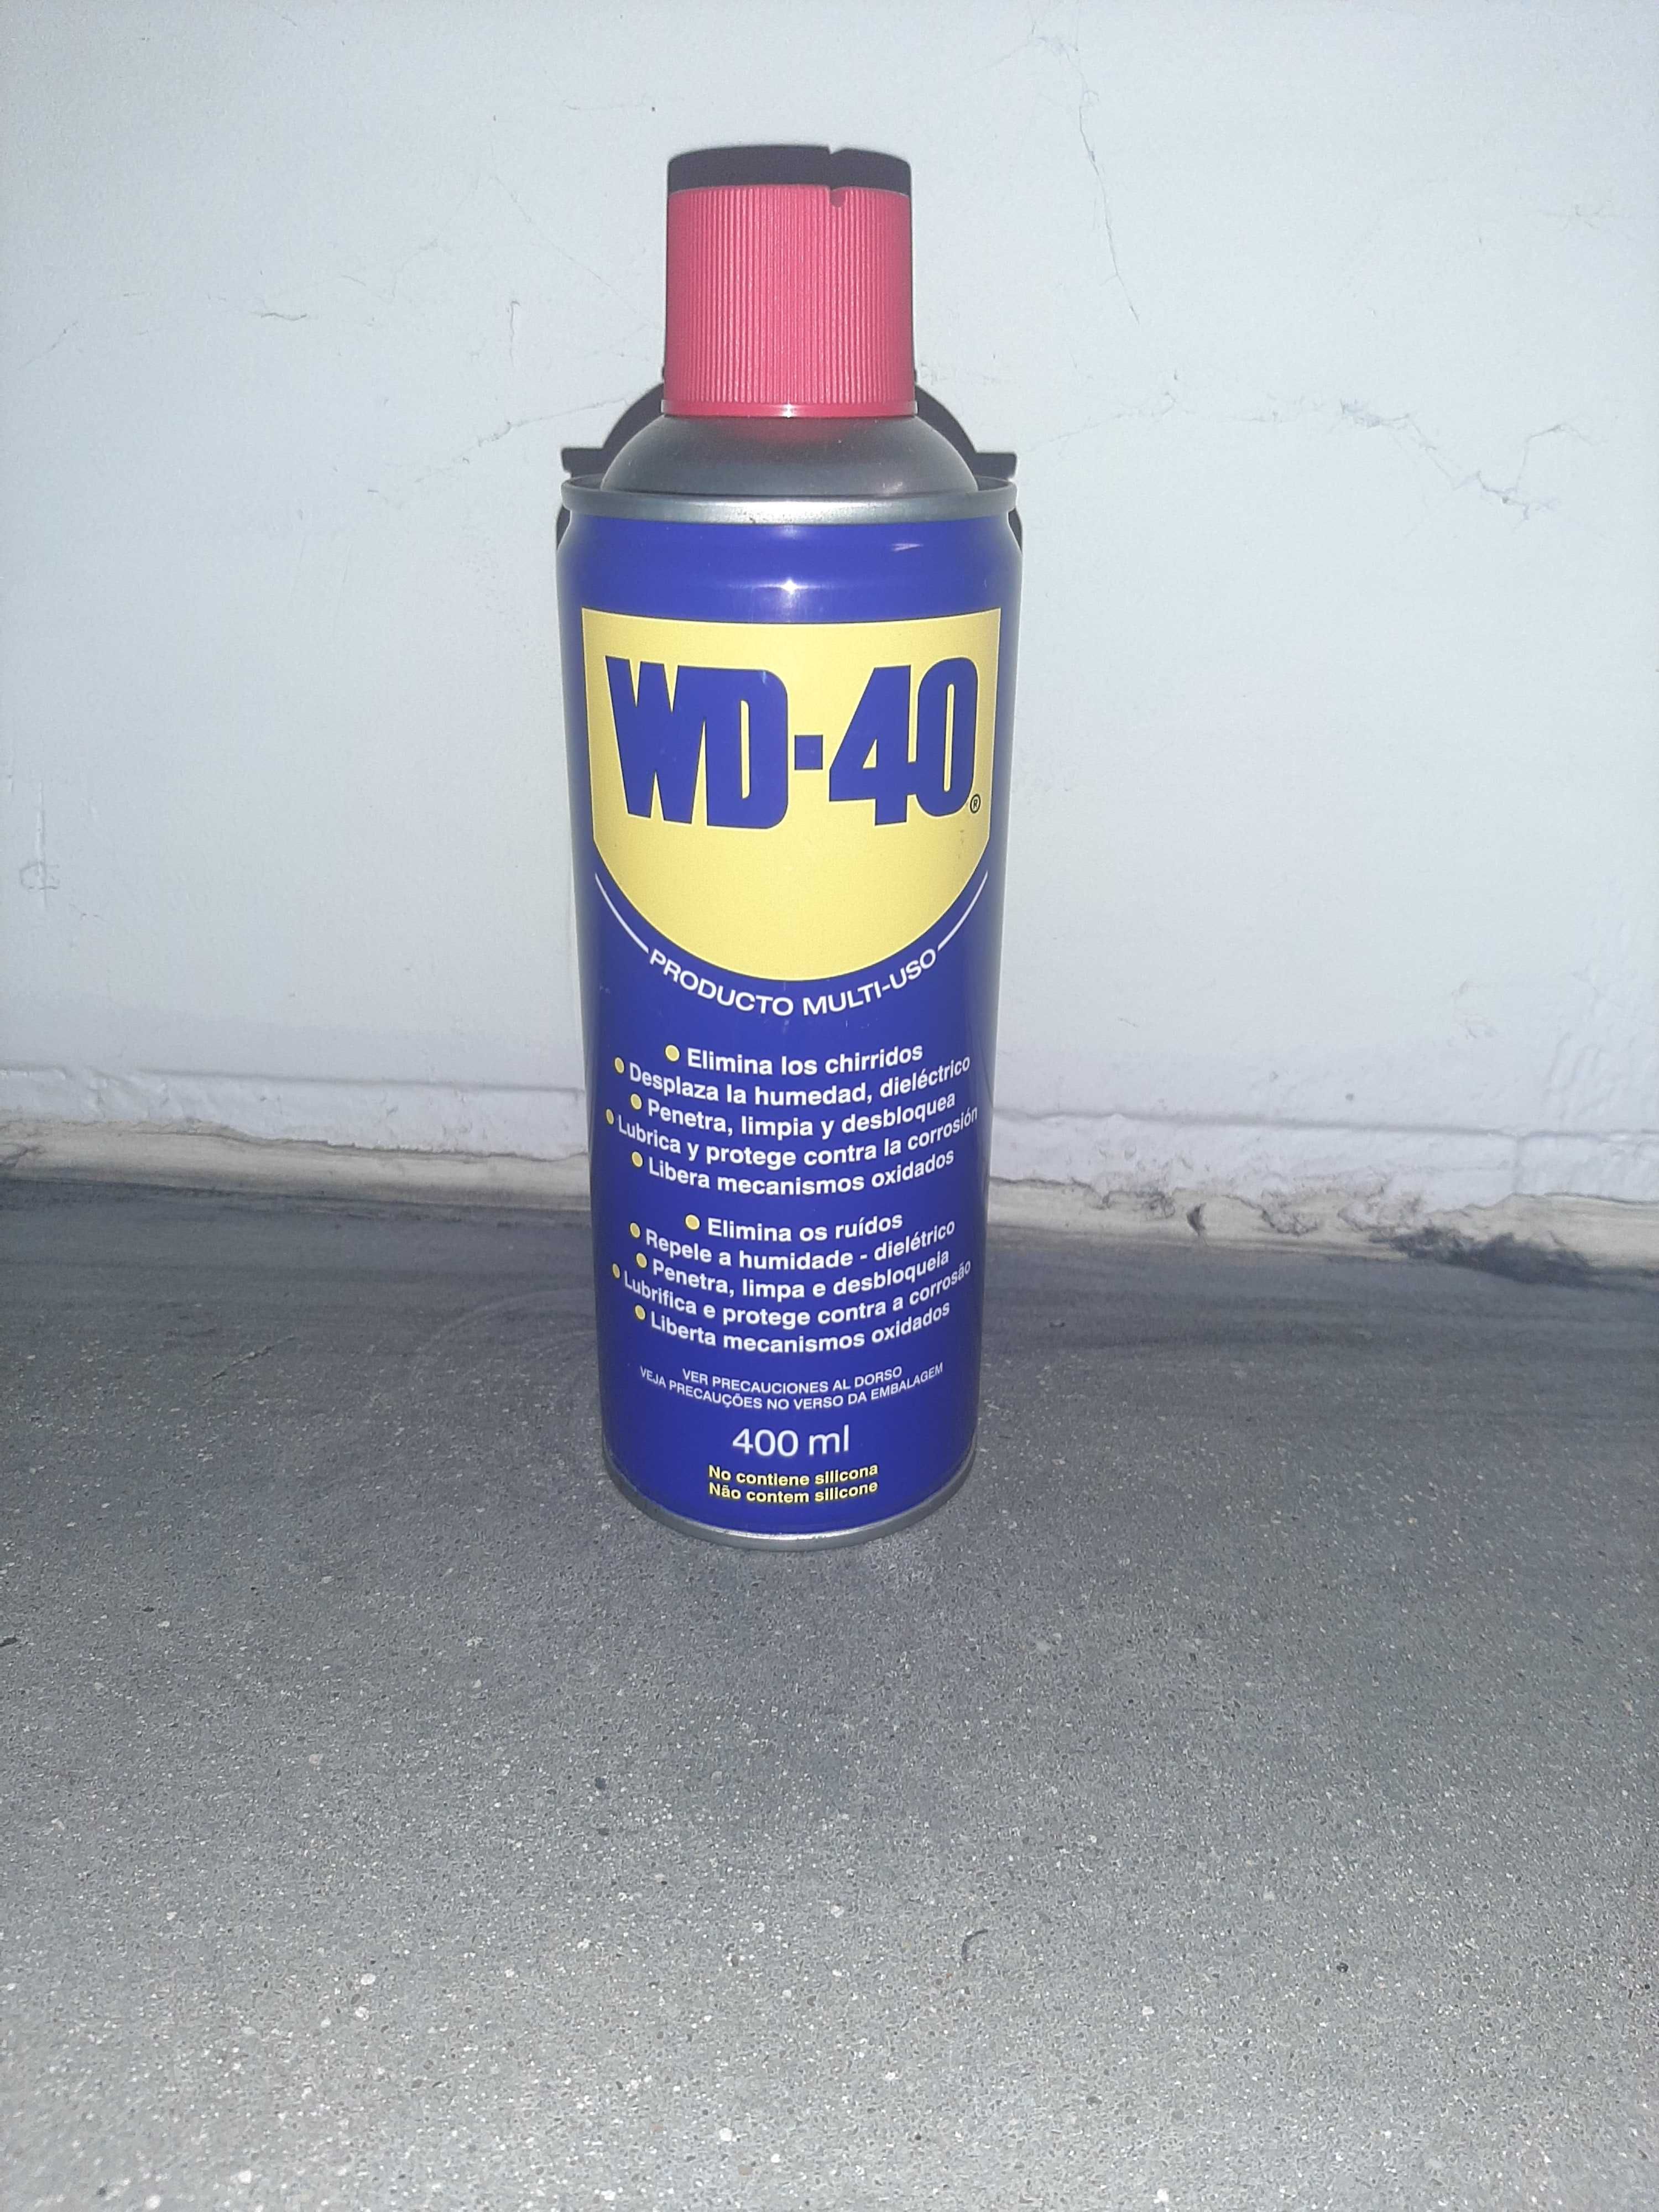 Lata WD-40 em spray